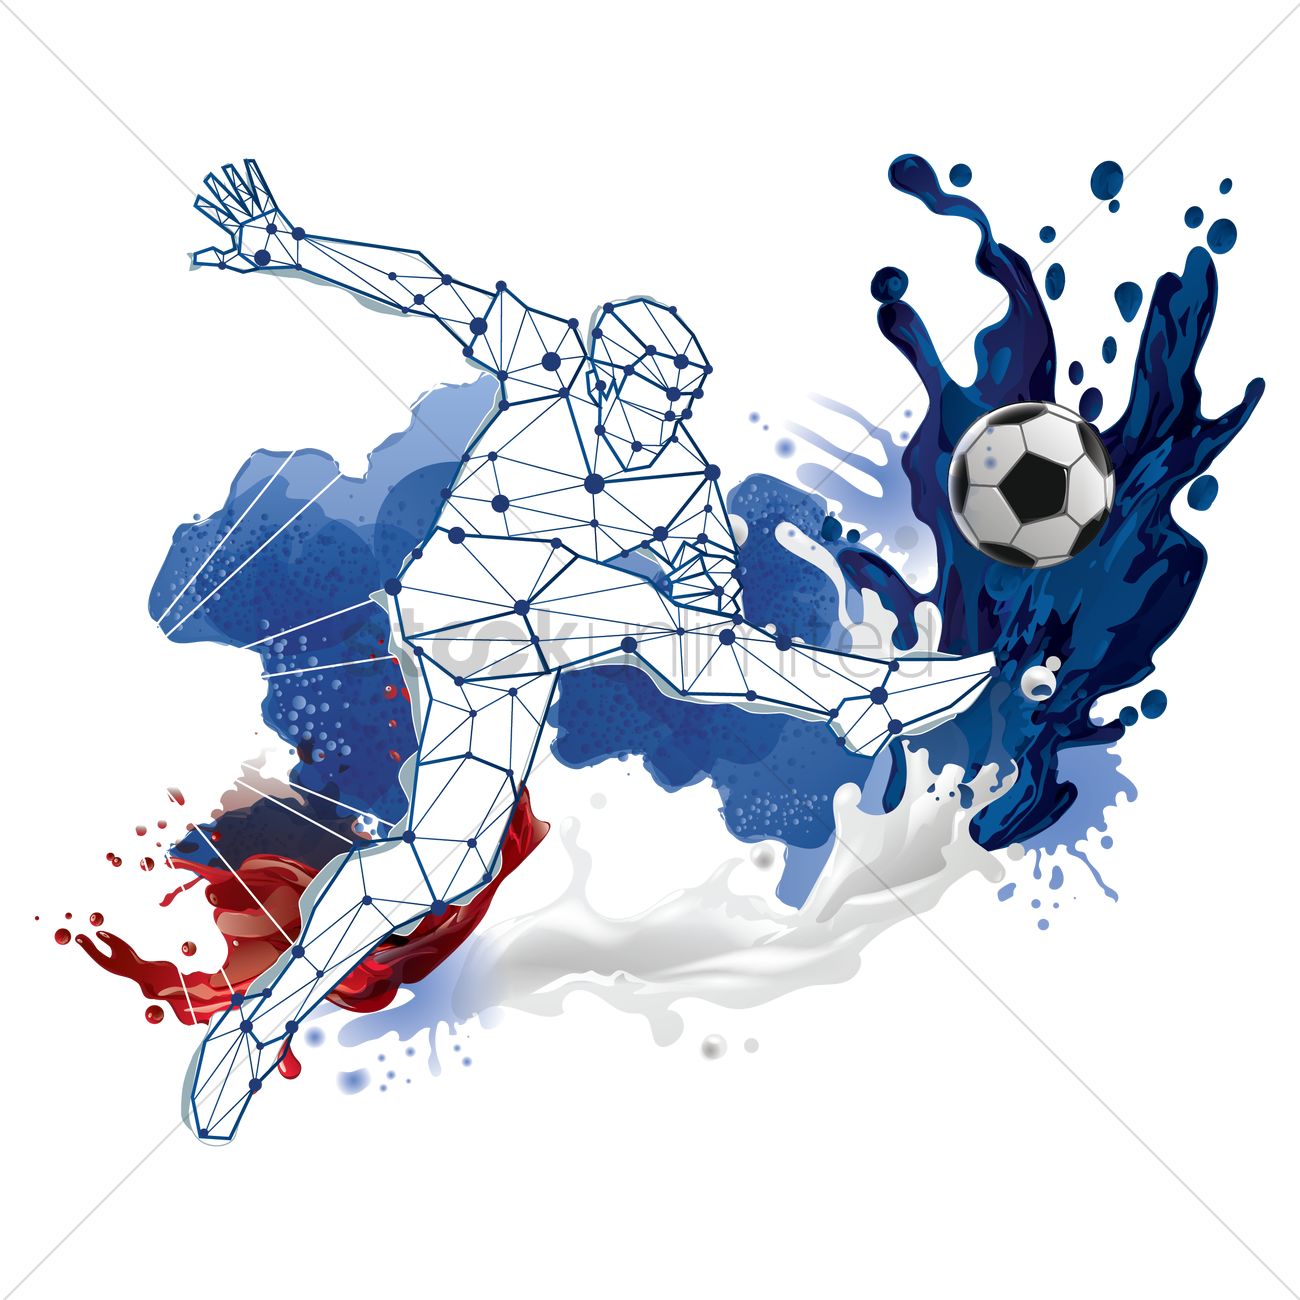 Soccer player shooting silhou